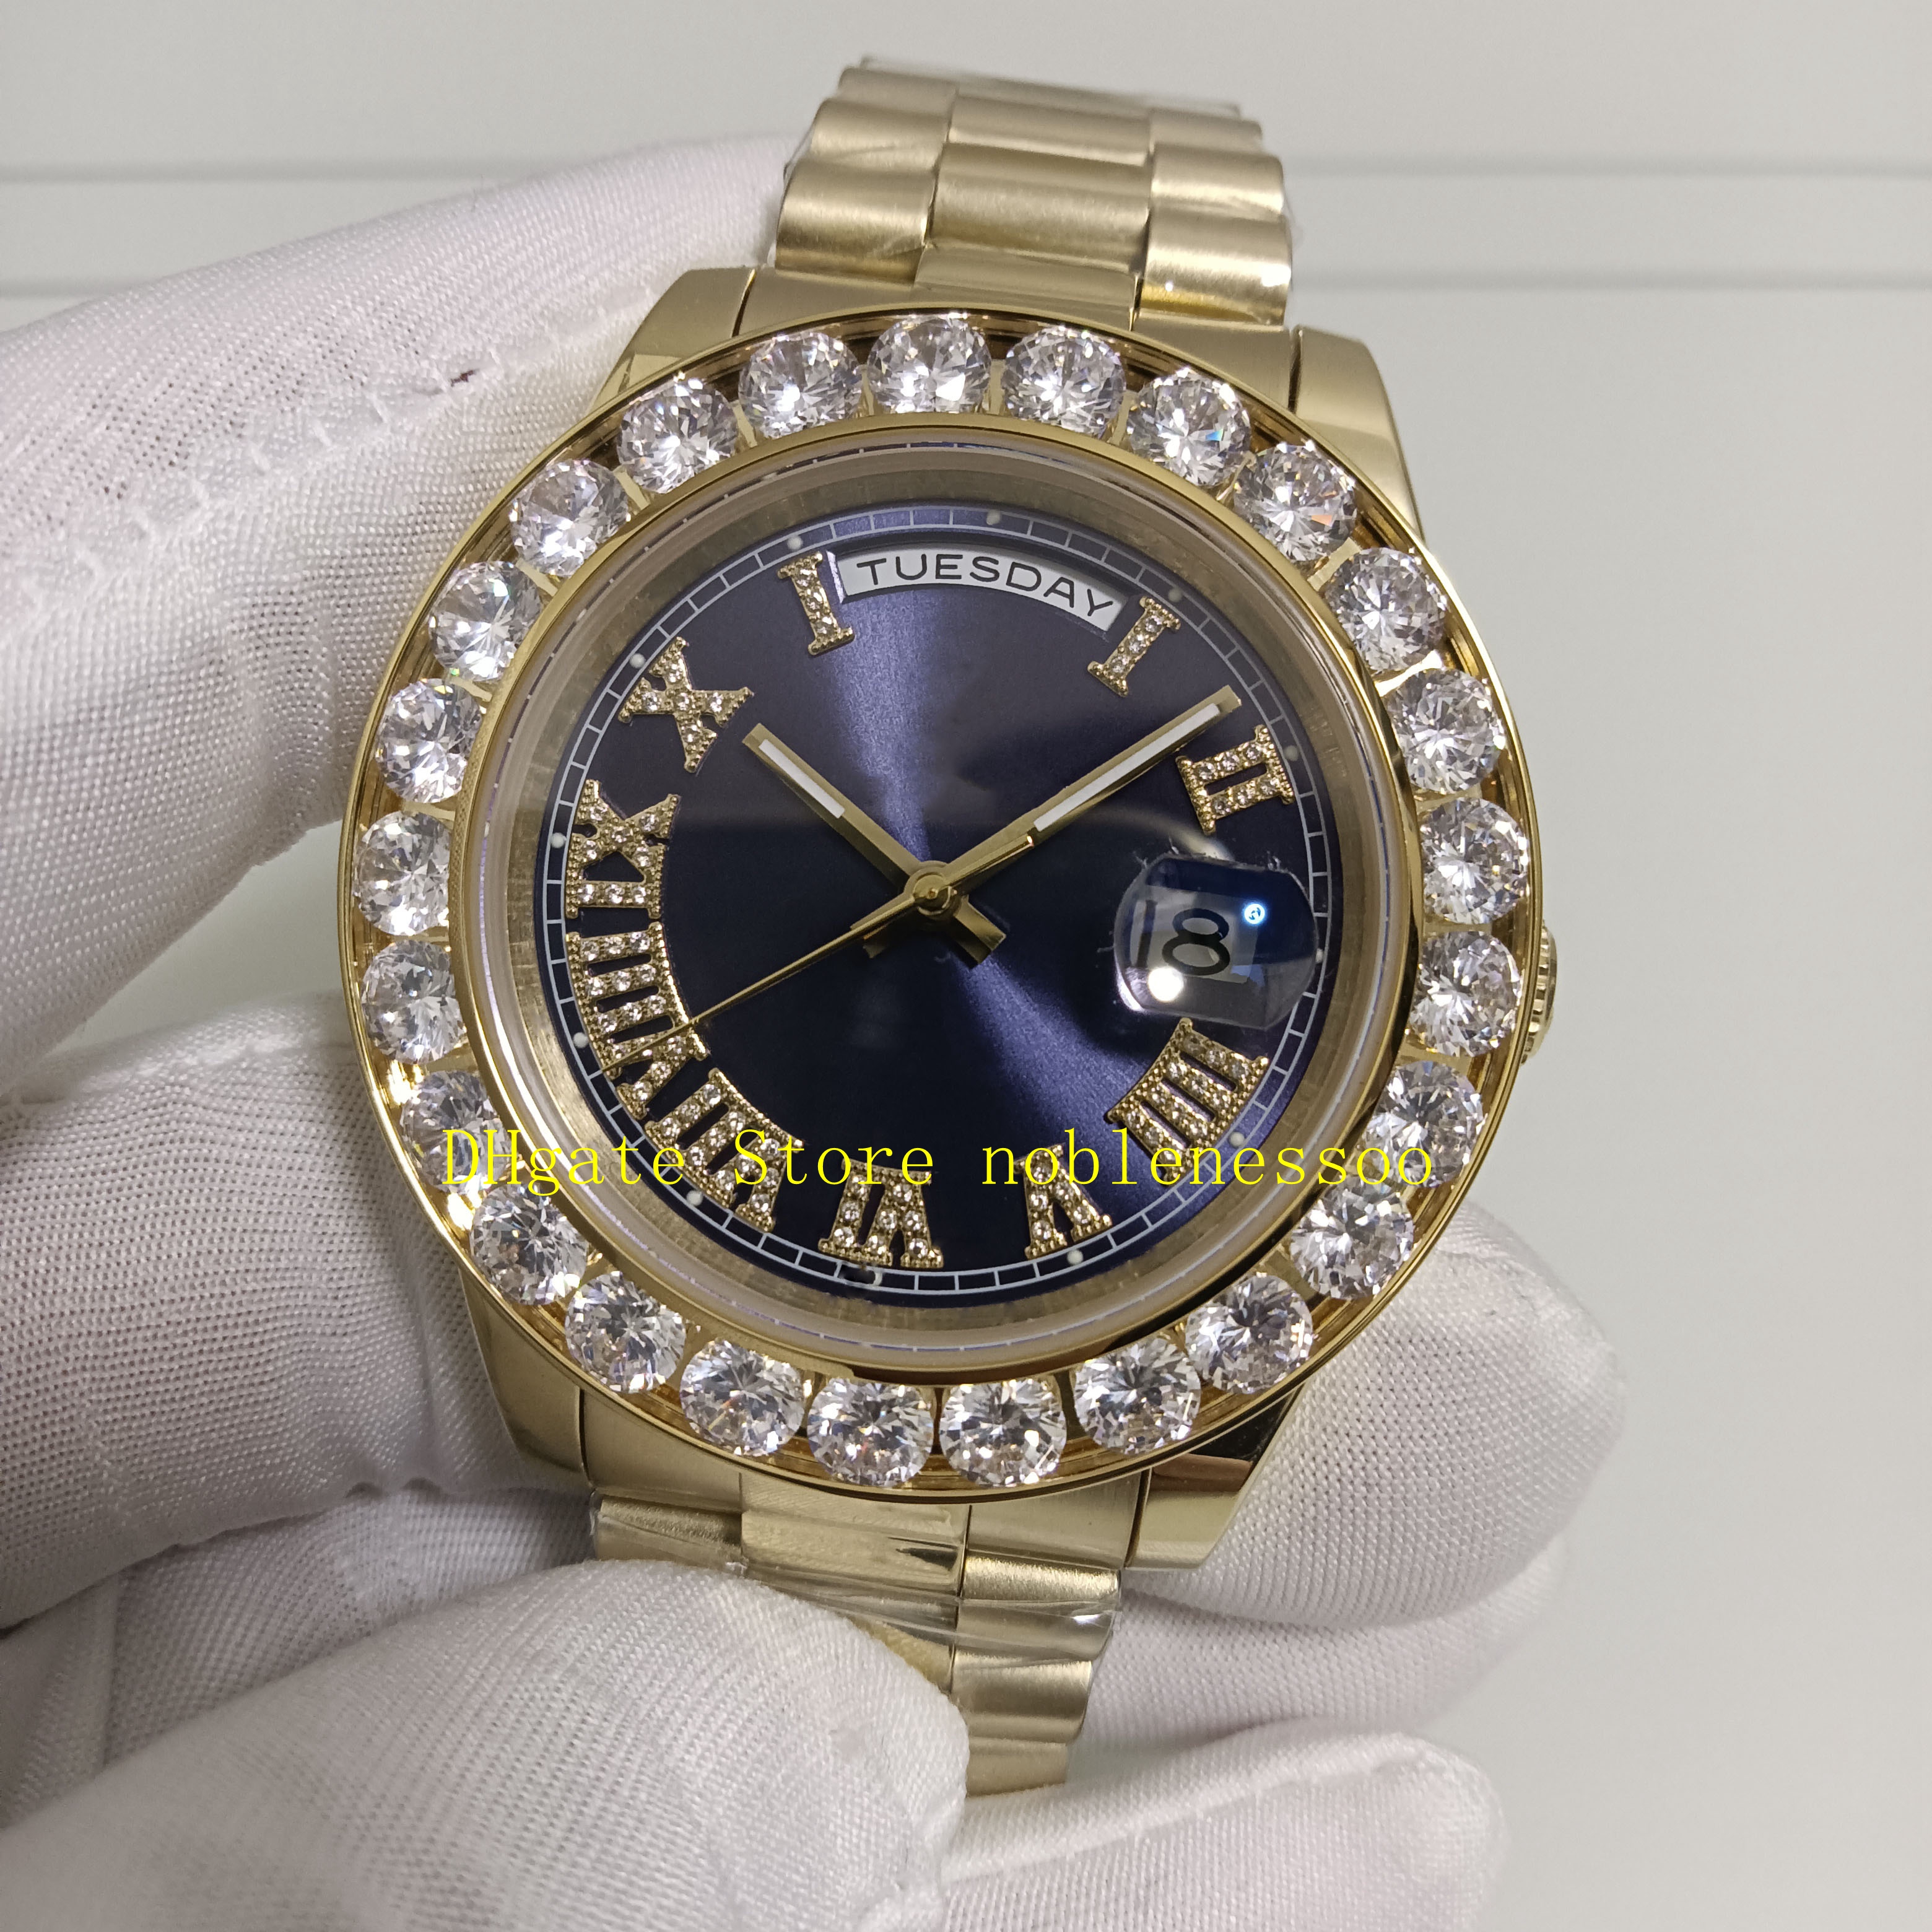 Relógio masculino de ouro amarelo, 5 estilos, real po, com caixa, 43mm, azul, preto, mostrador grande, moldura de diamante, vermelho, azul, verde, ásia 2813, movemen208y